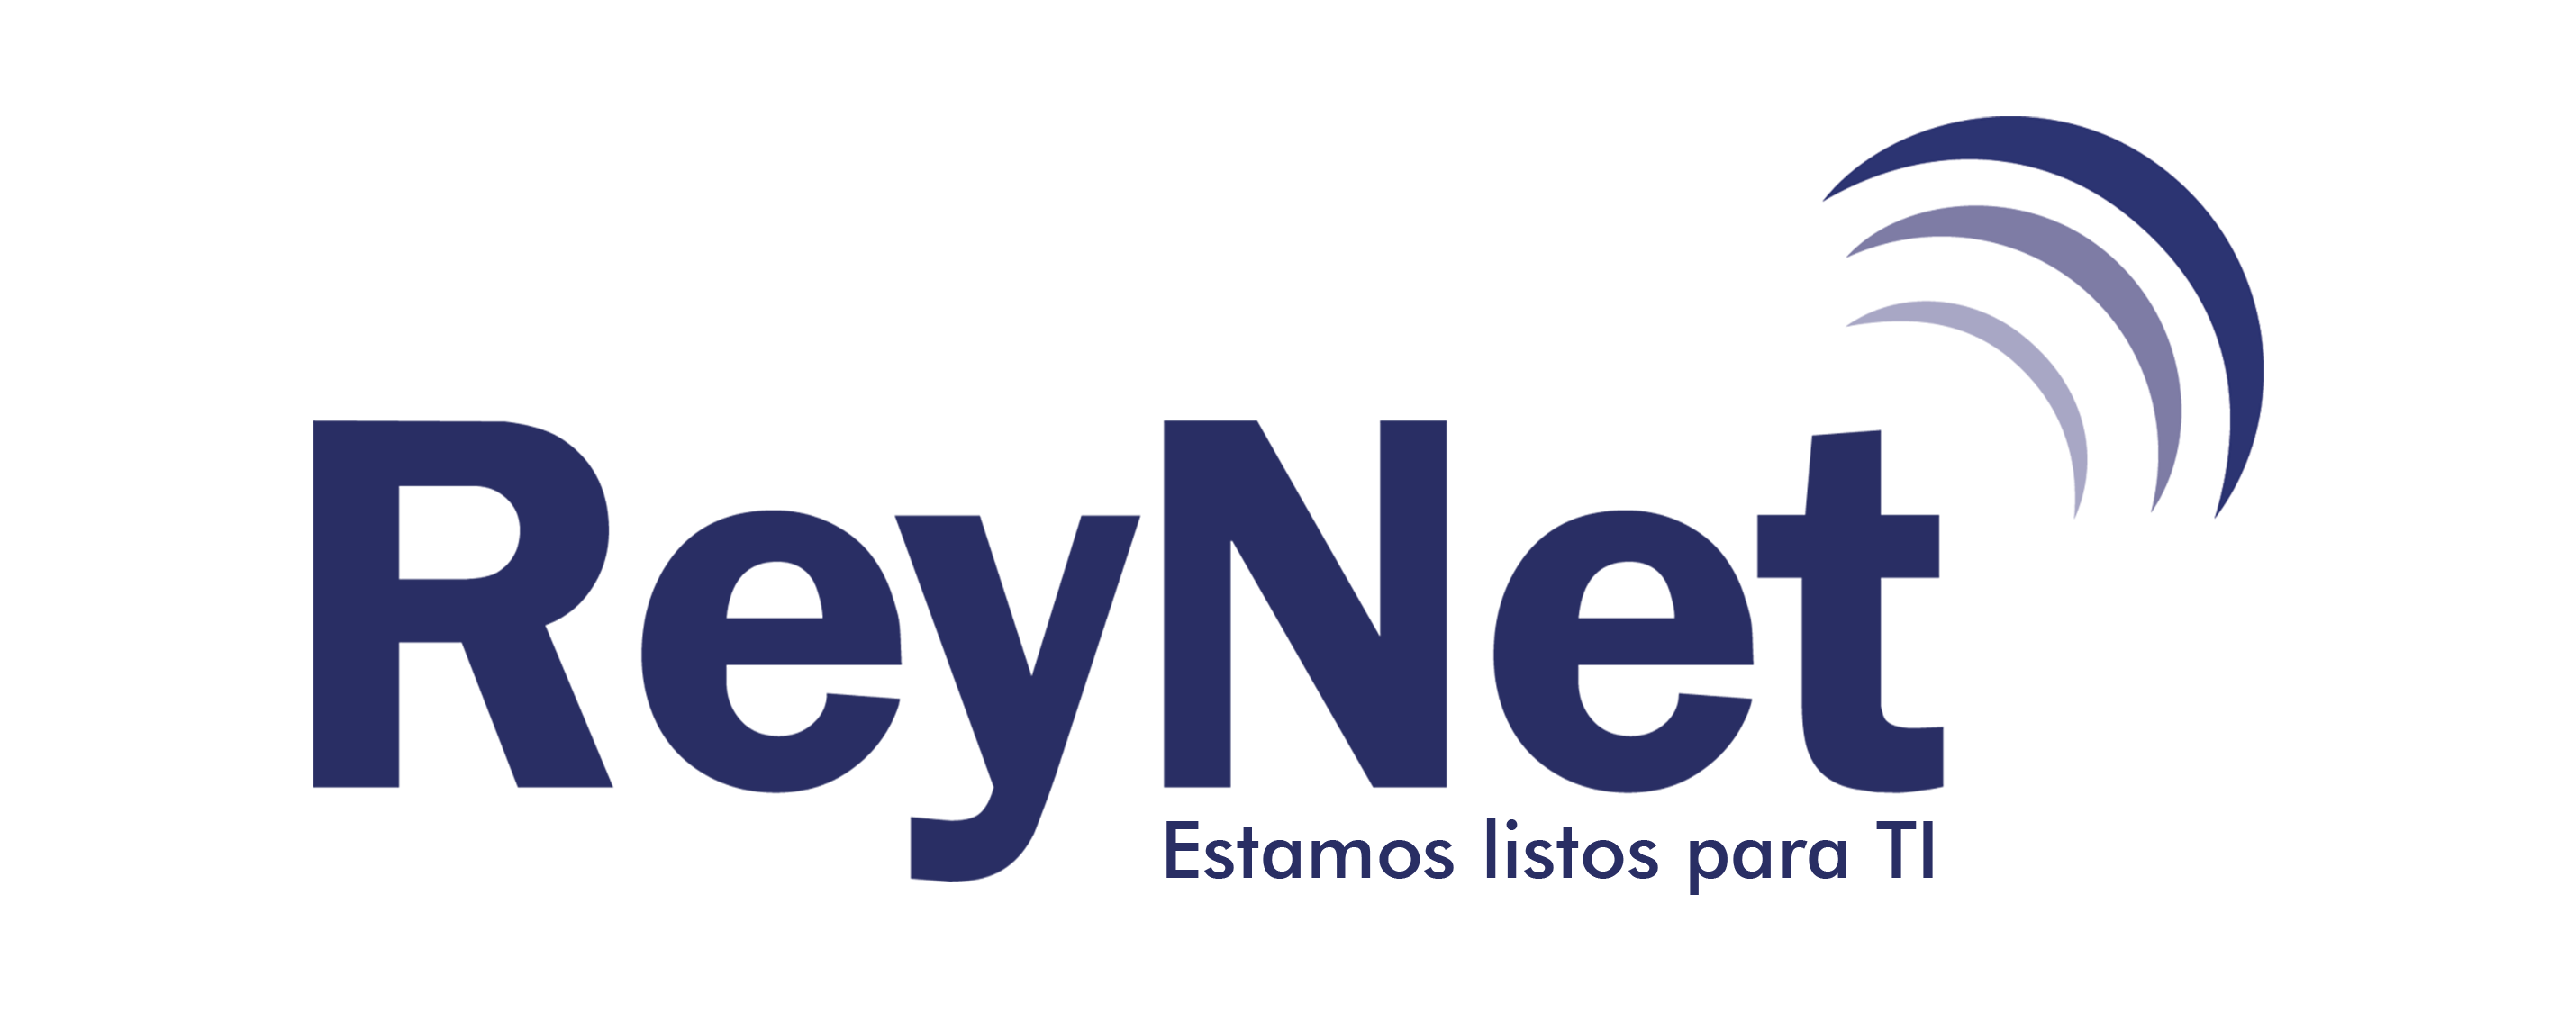 ReyNet Services